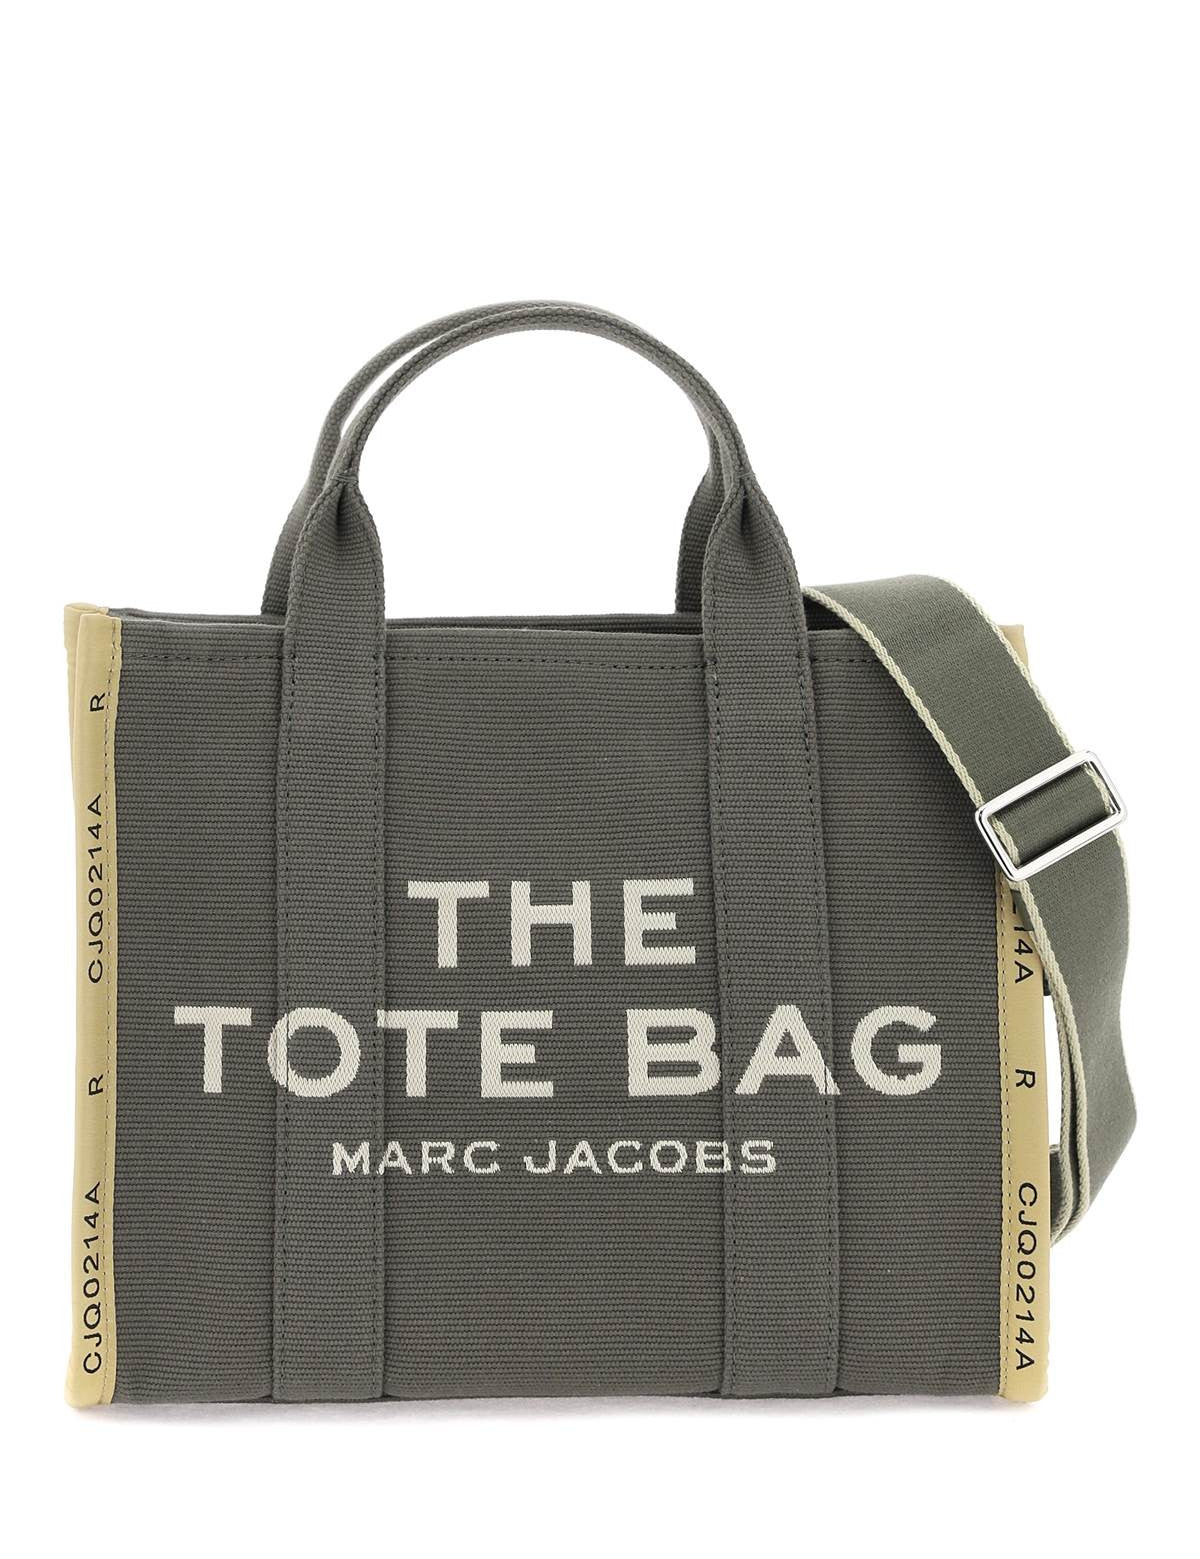 marc-jacobs-the-jacquard-medium-tote-bag_5c53b232-4603-43b2-a815-8b7022e864e1.jpg